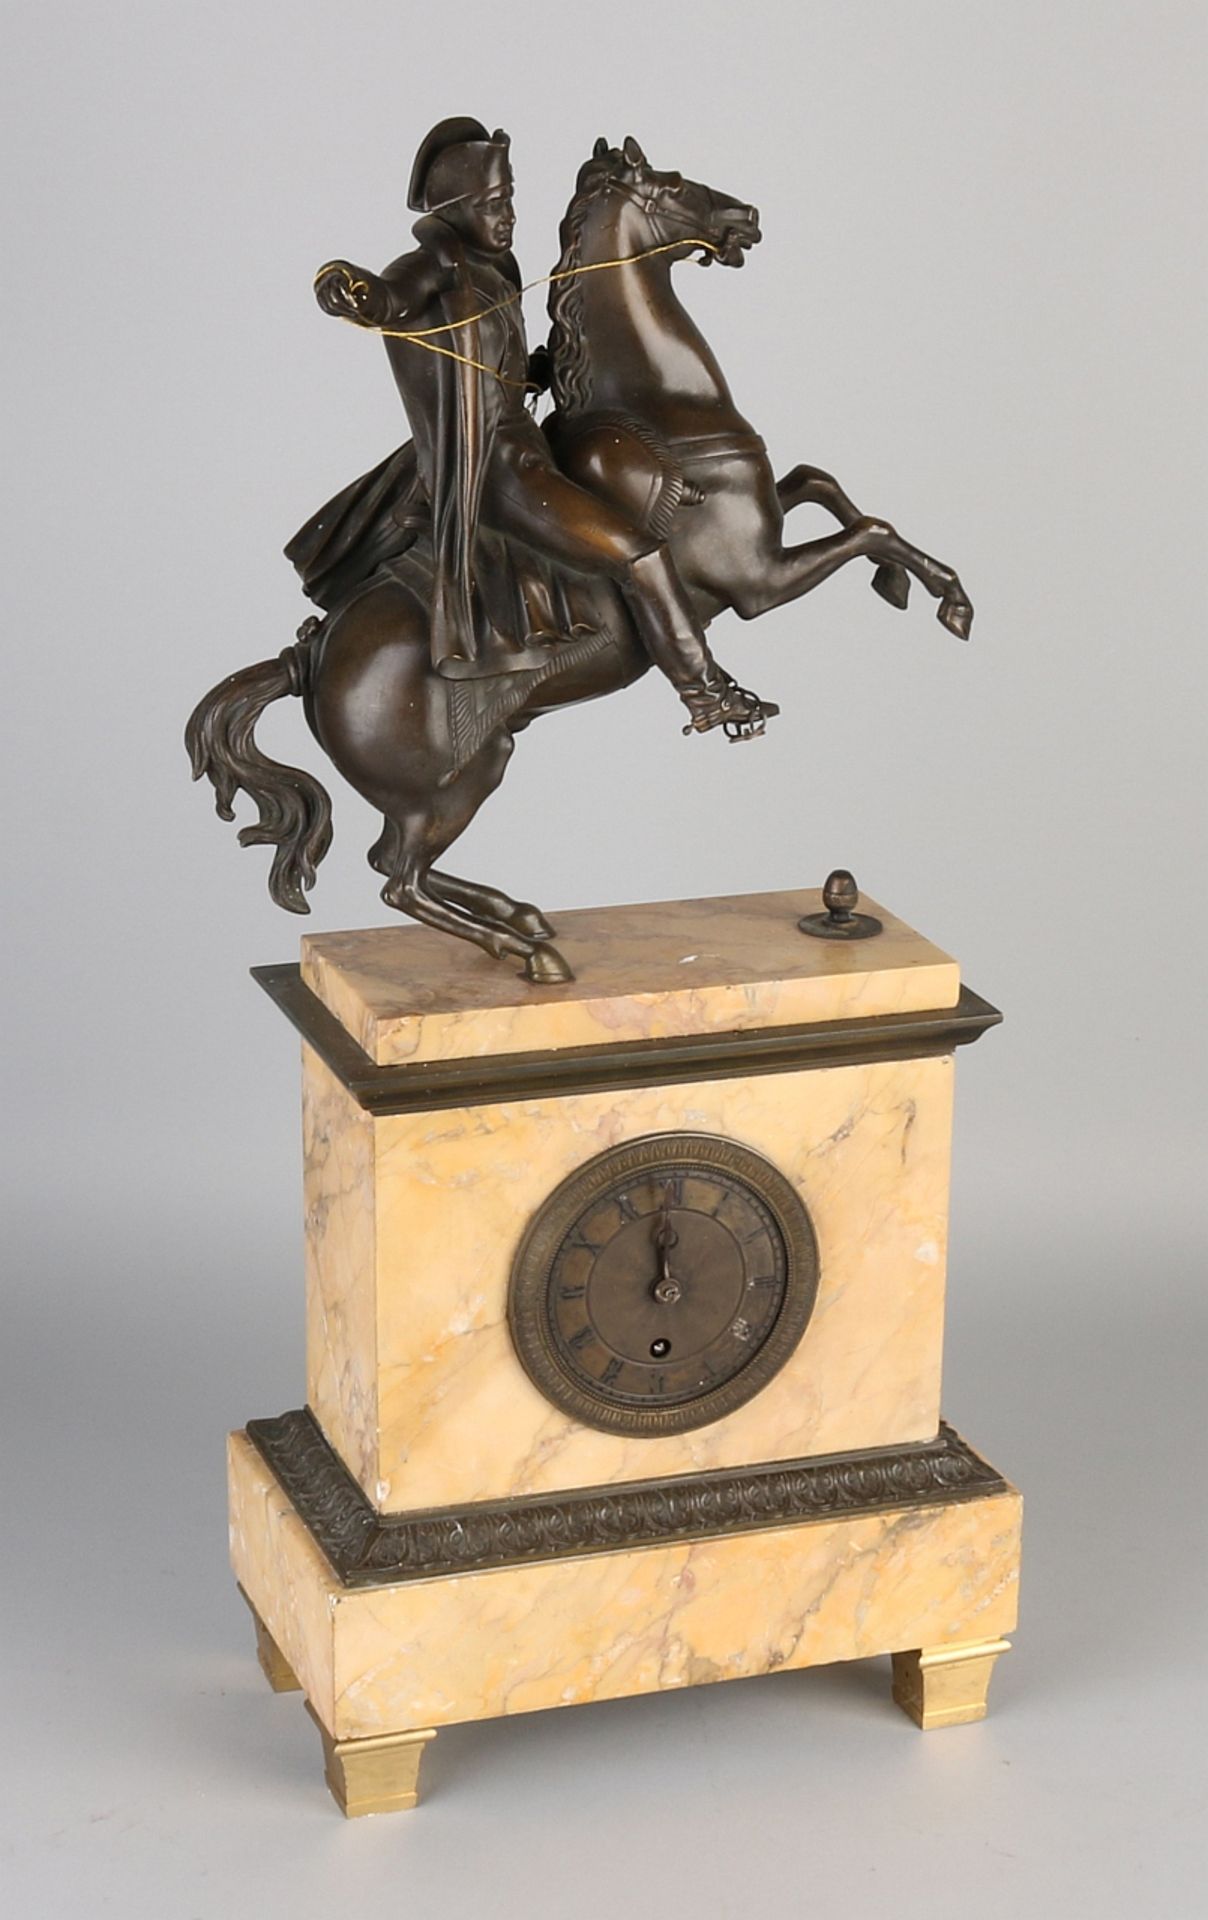 French Charles Dix mantel clock, 1830